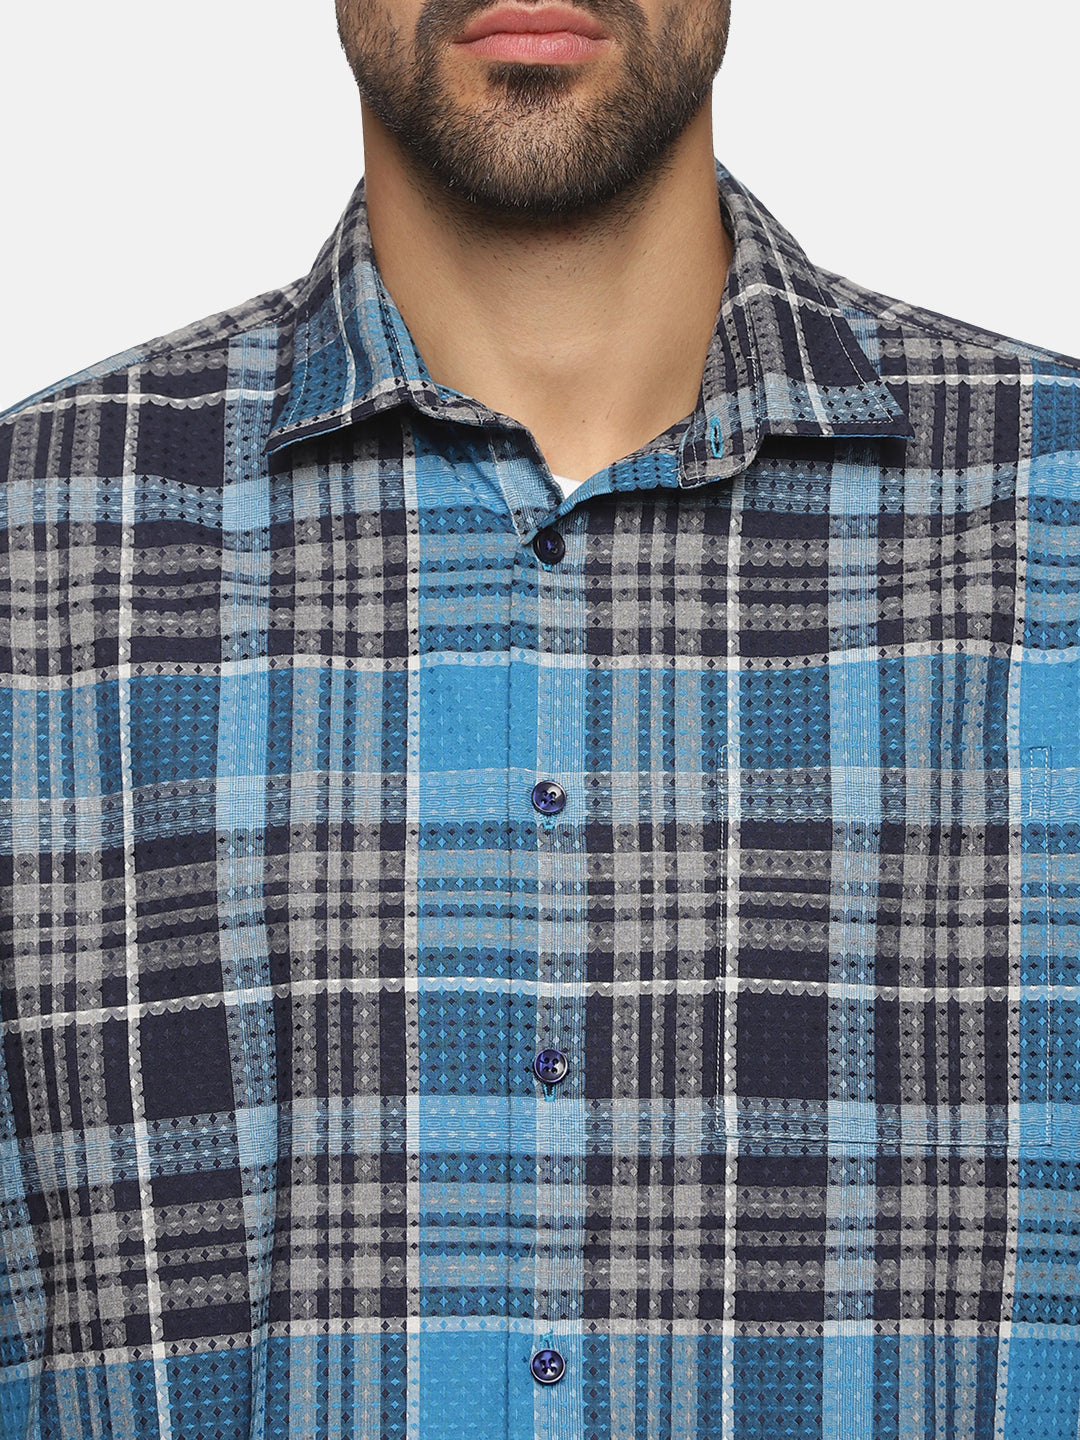 Men Blue & Black Checkered Slim Fit Casual Shirt, Men's Half Sleeve Cotton Shirt